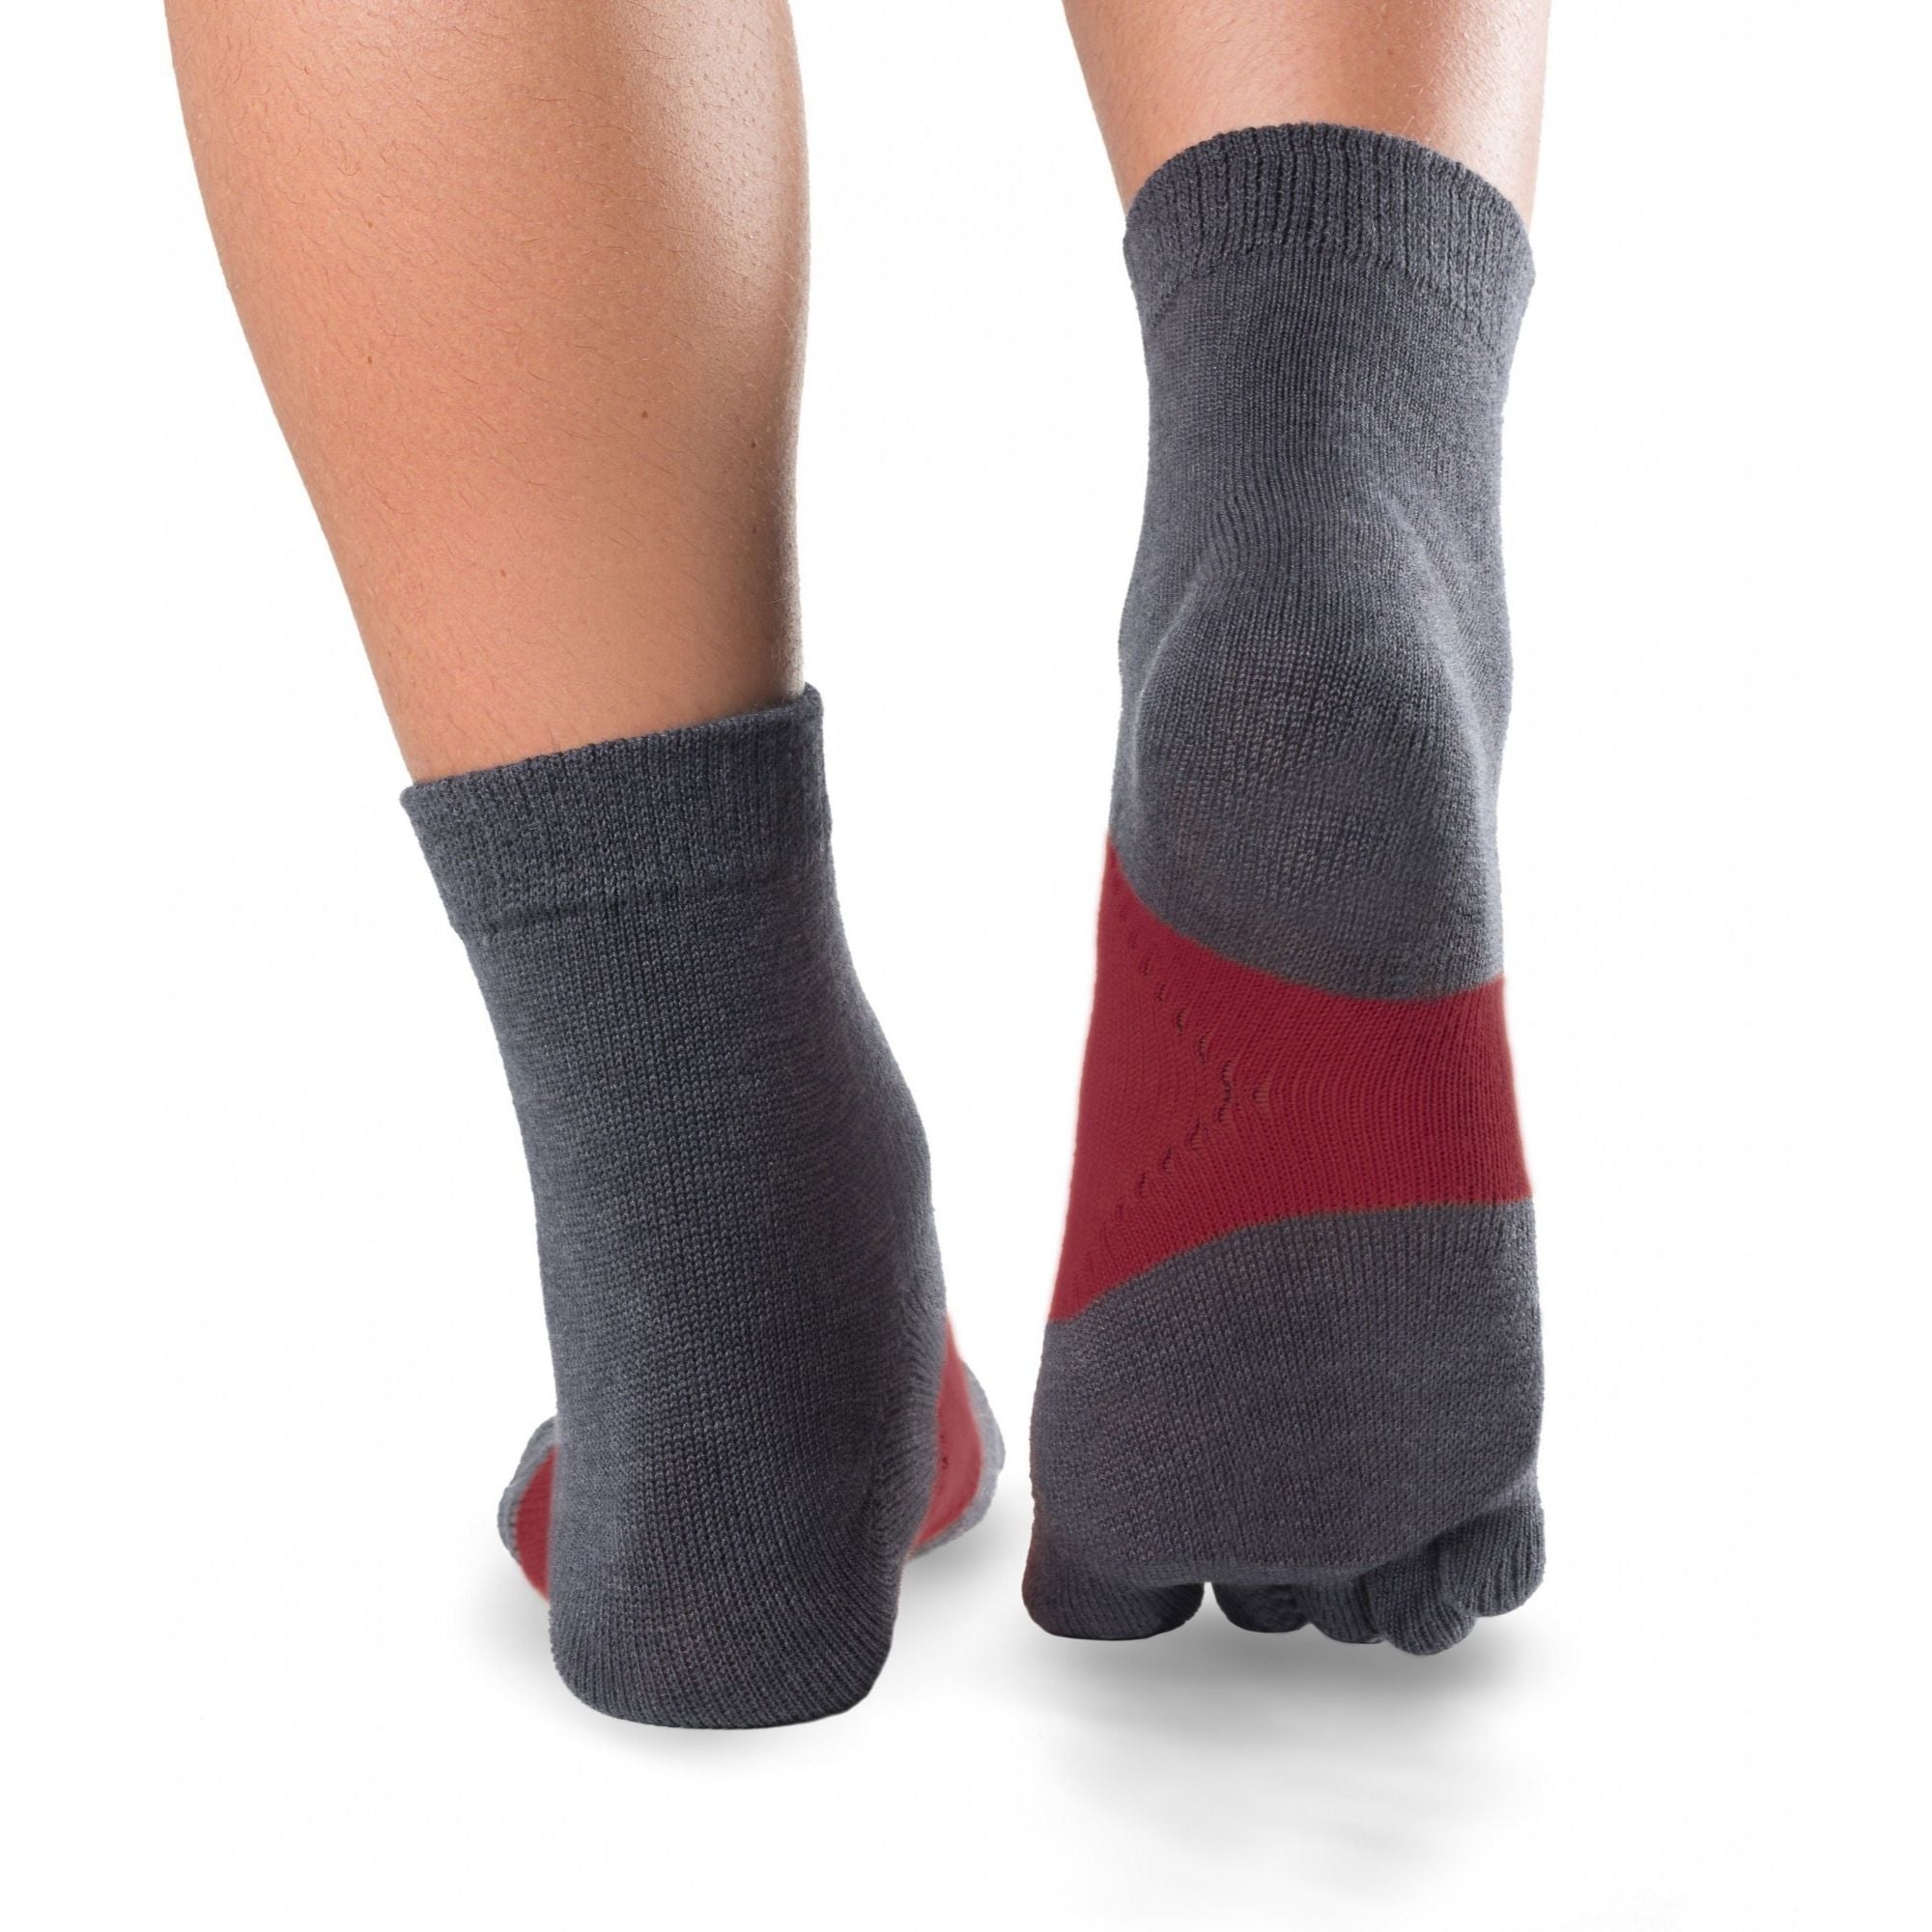 Running TS Running-calze con dita - l'essenziale running-calze con dita da Knitido :grigio / rosso carminio